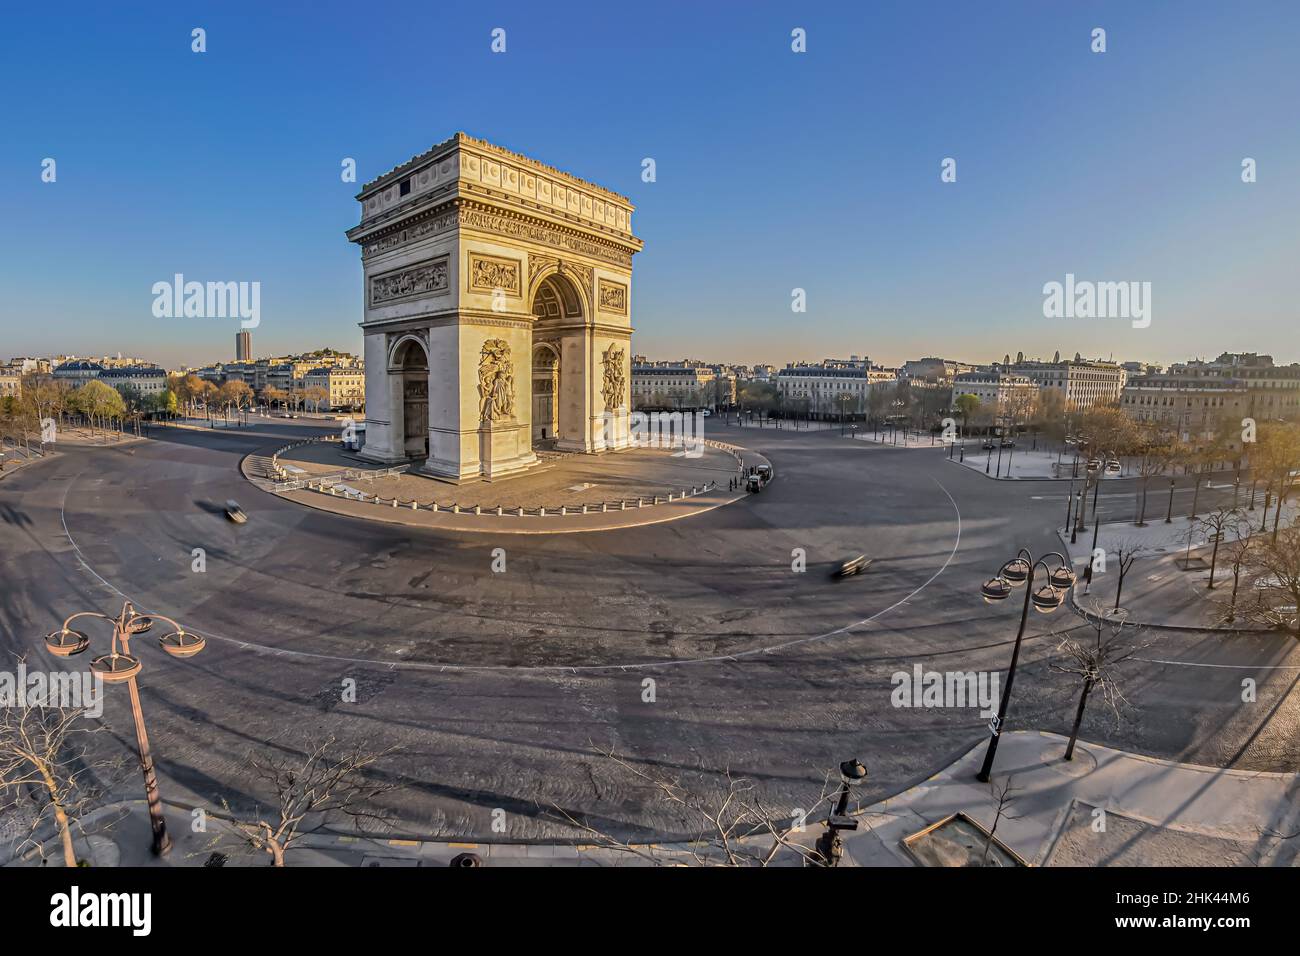 France - Ile de France - Paris (75): Third week of containment due to the Coronavirus epidemic. Here, the Place de l'Etoile and the Arc de Triomphe fr Stock Photo